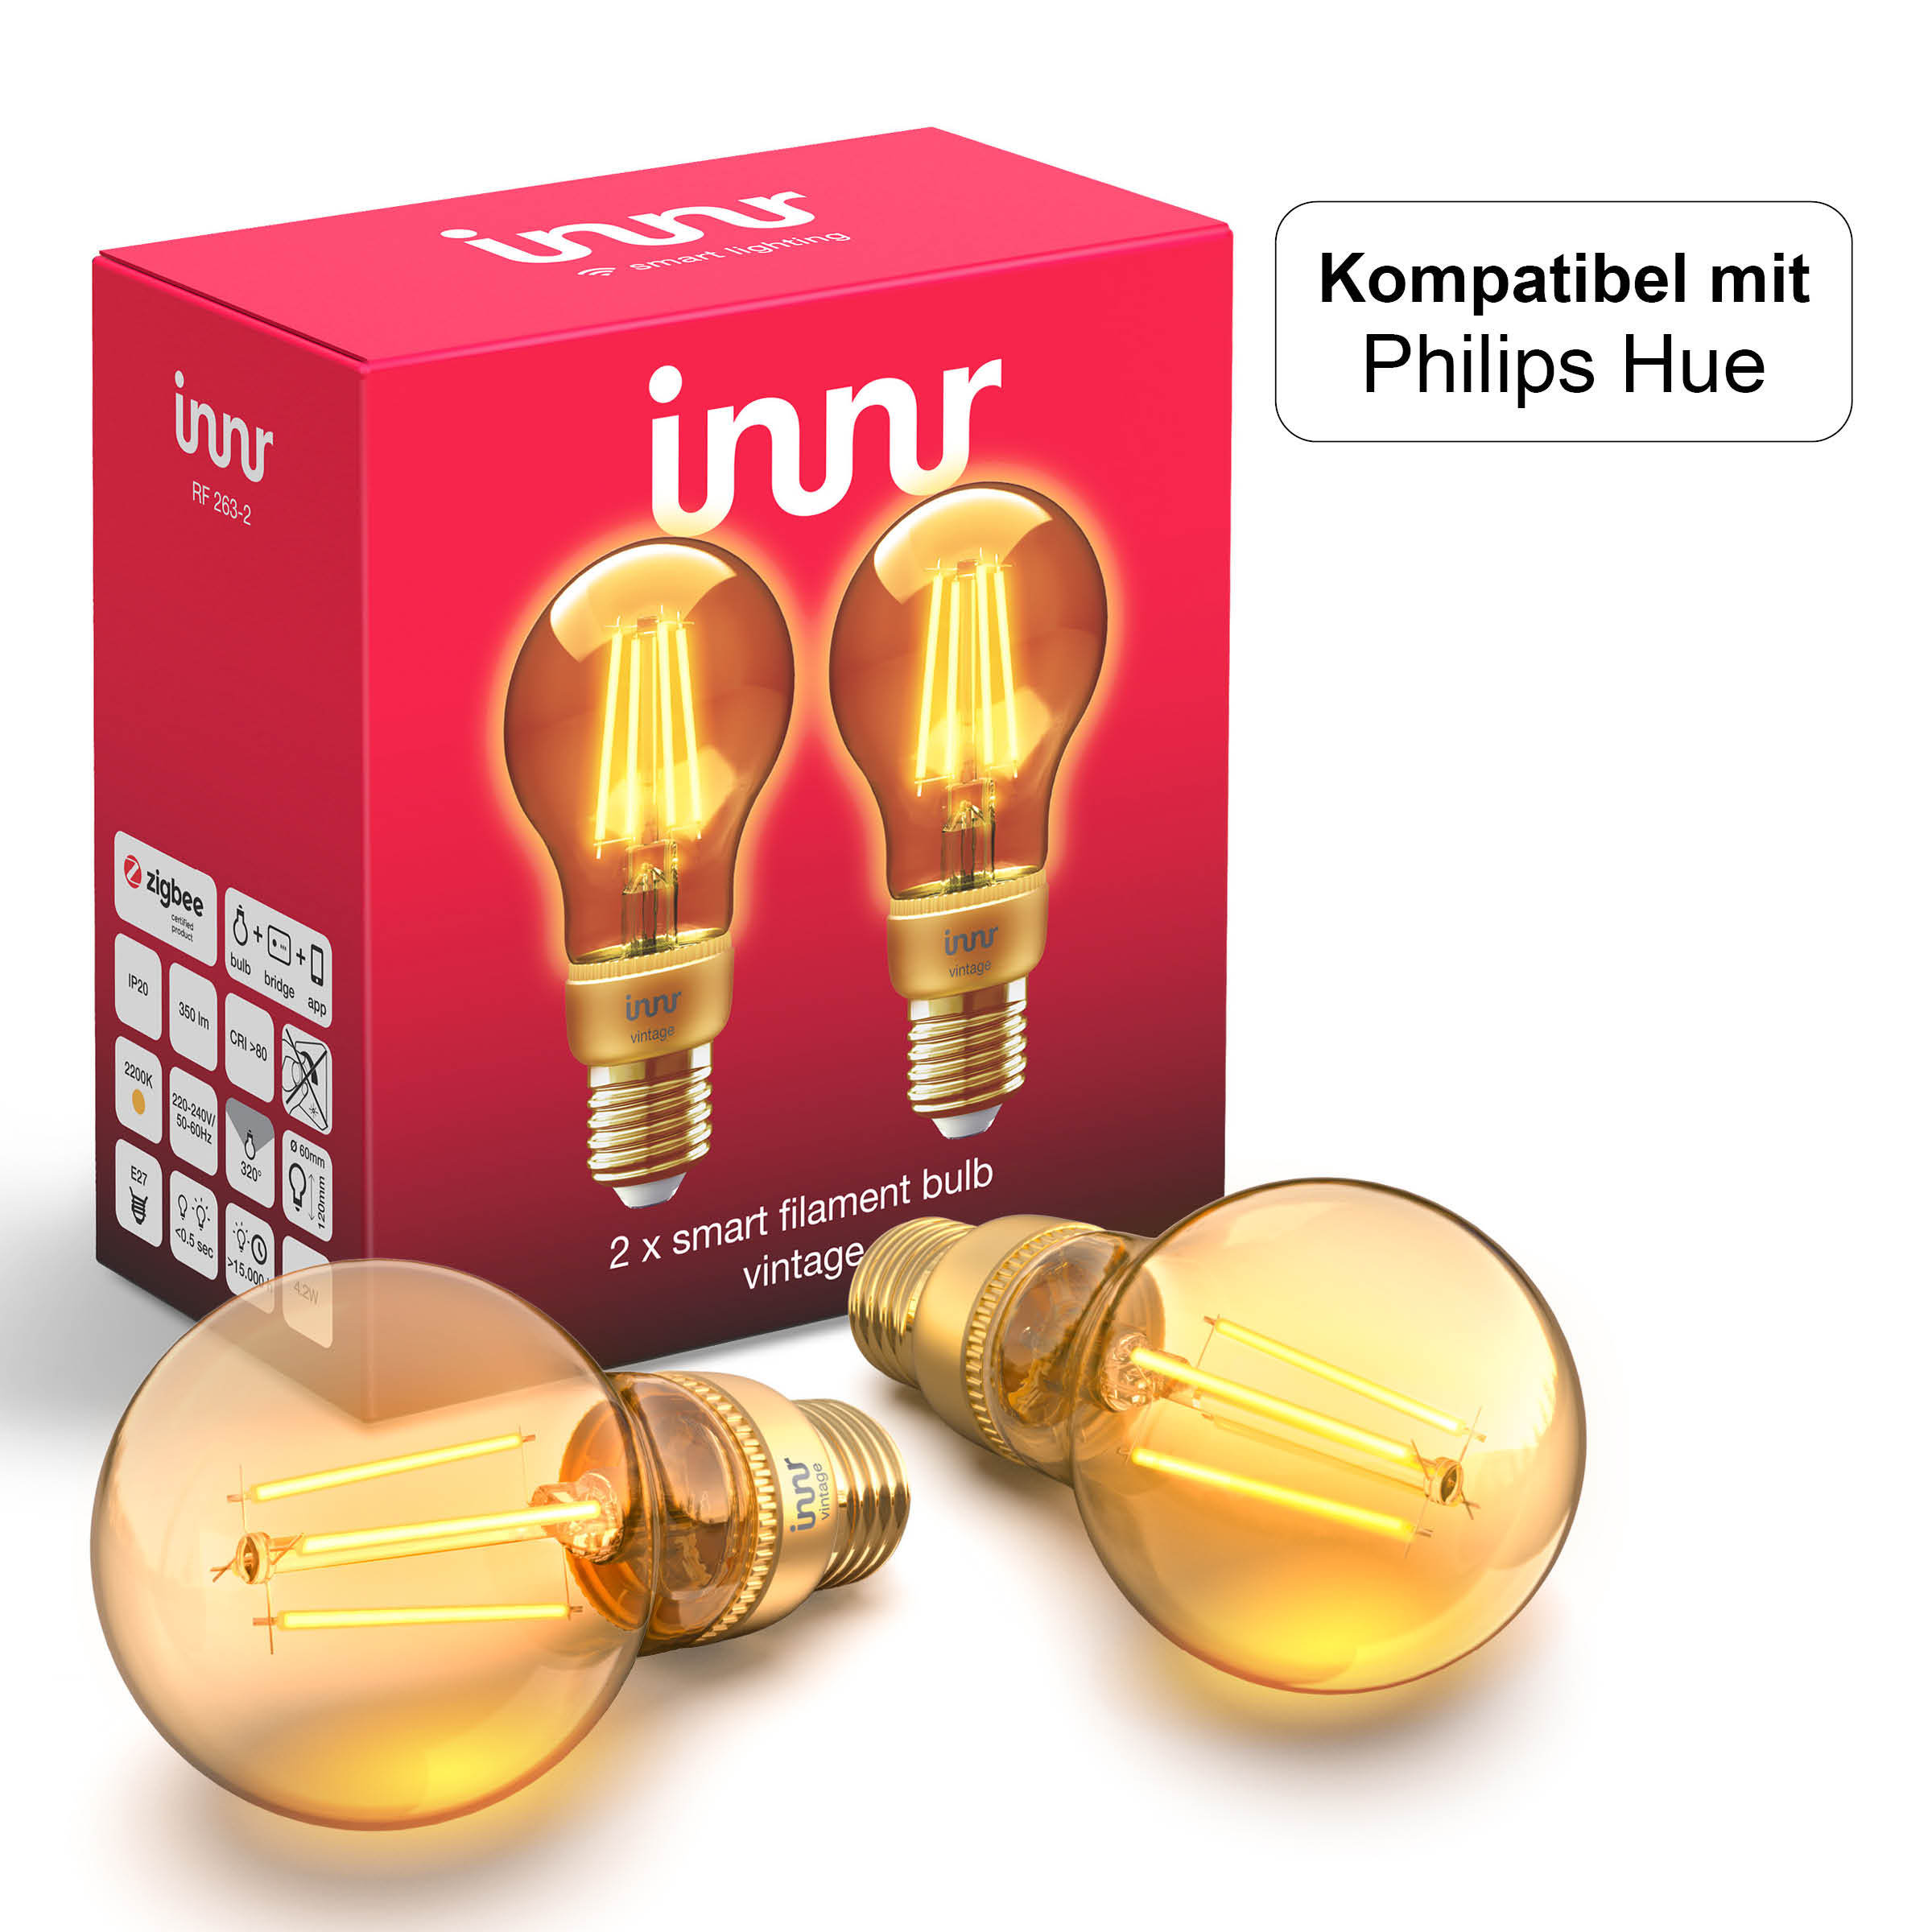 Bulb, Zigbee Filament Philips LED Alexa, Hue 263-2 LED, RF Kompatibel Smart 2200K Lampe INNR 2-pack mit Vintage &